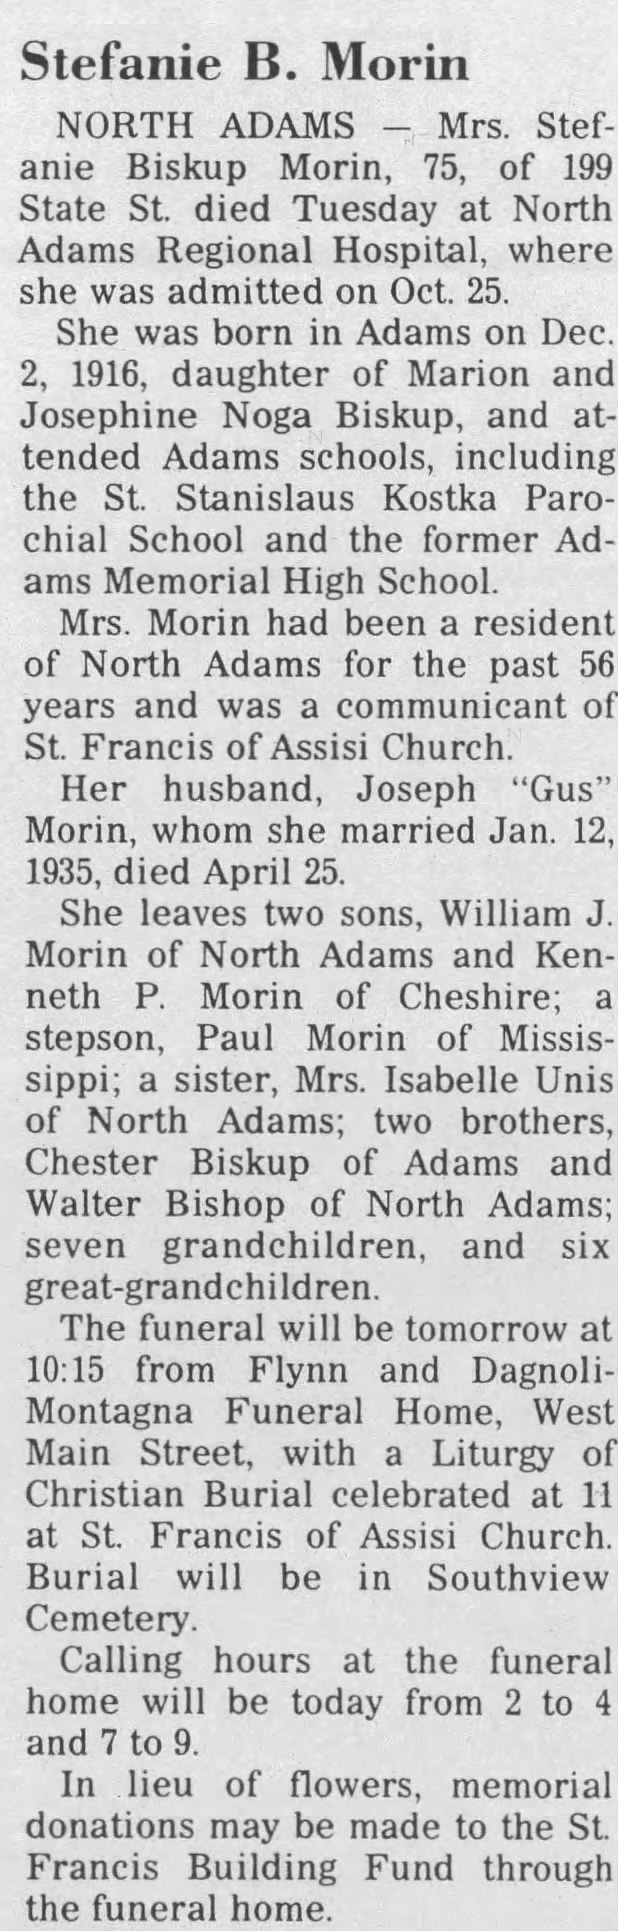 Obituary:  Stephanie Biskup Morin